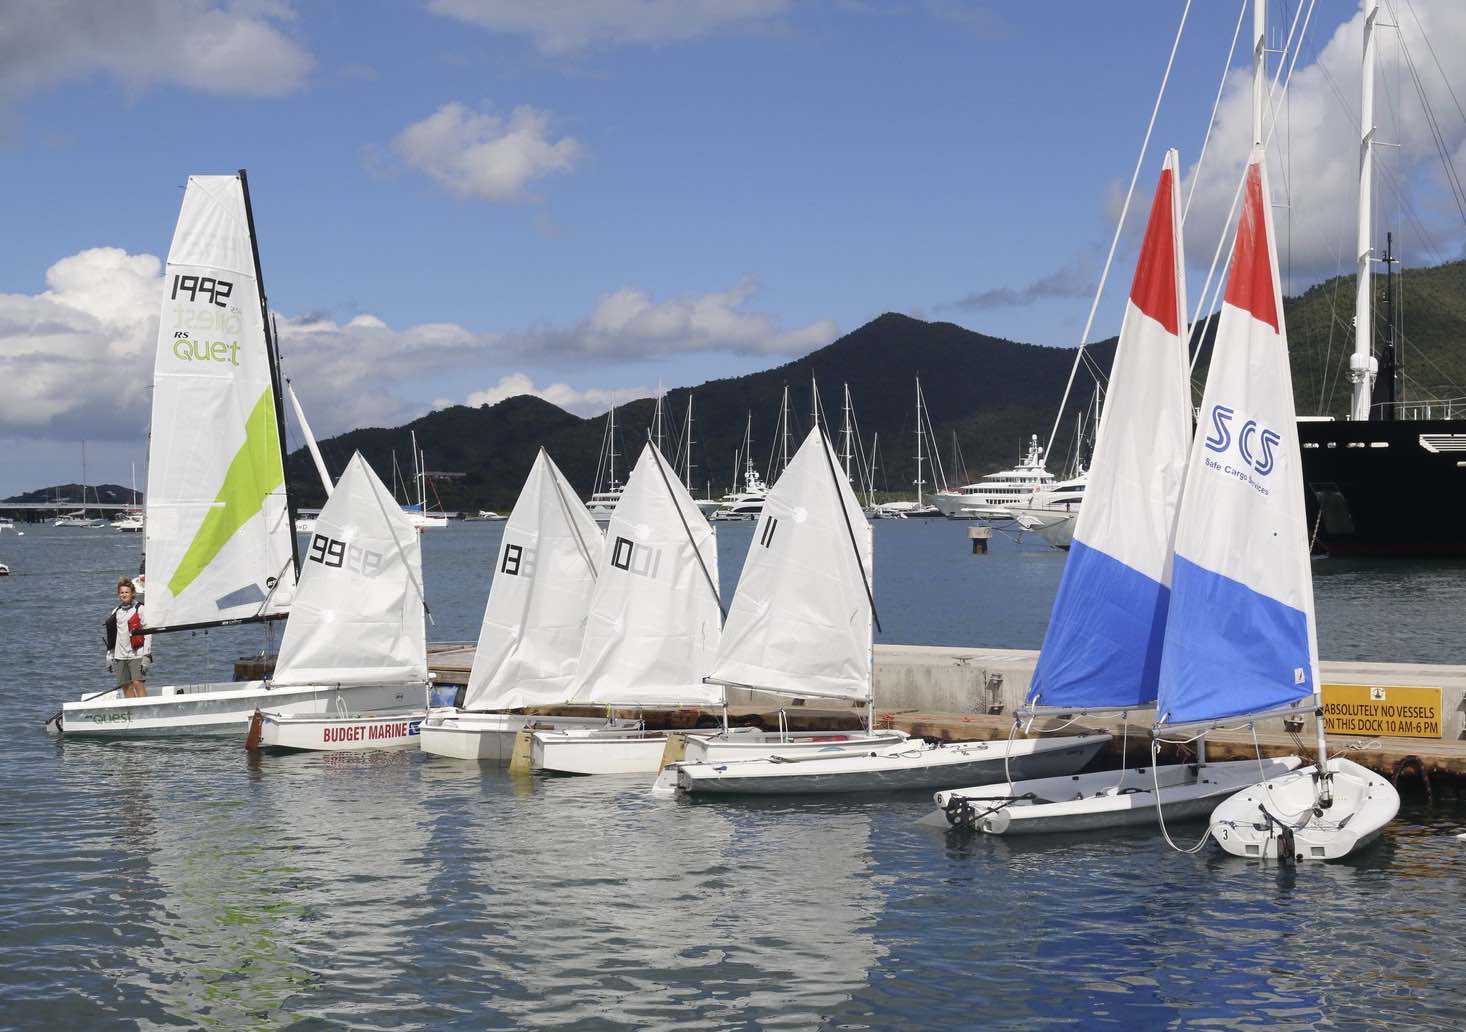 Sint Maarten Yacht Club Bar and Restaurant with sailboats at dock